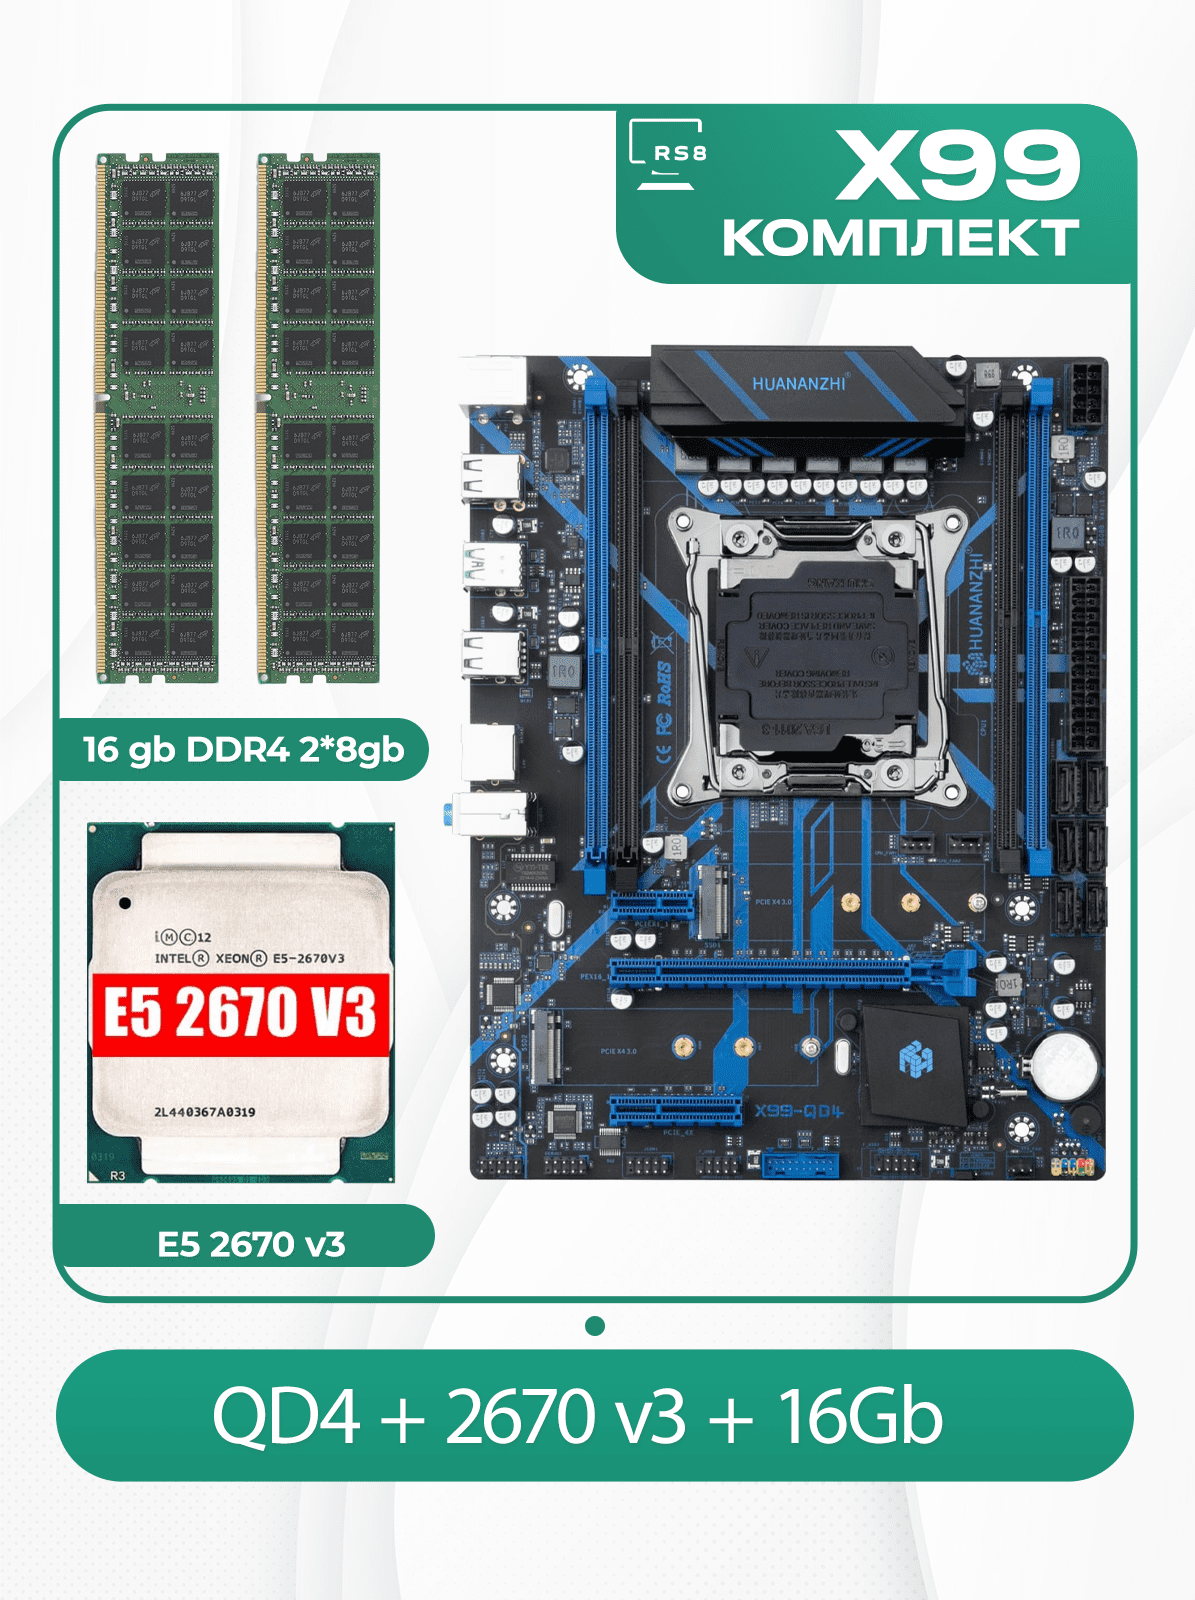 Комплект материнской платы X99: Huananzhi QD4 2011v3 + Xeon E5 2670v3 + DDR4 16Гб